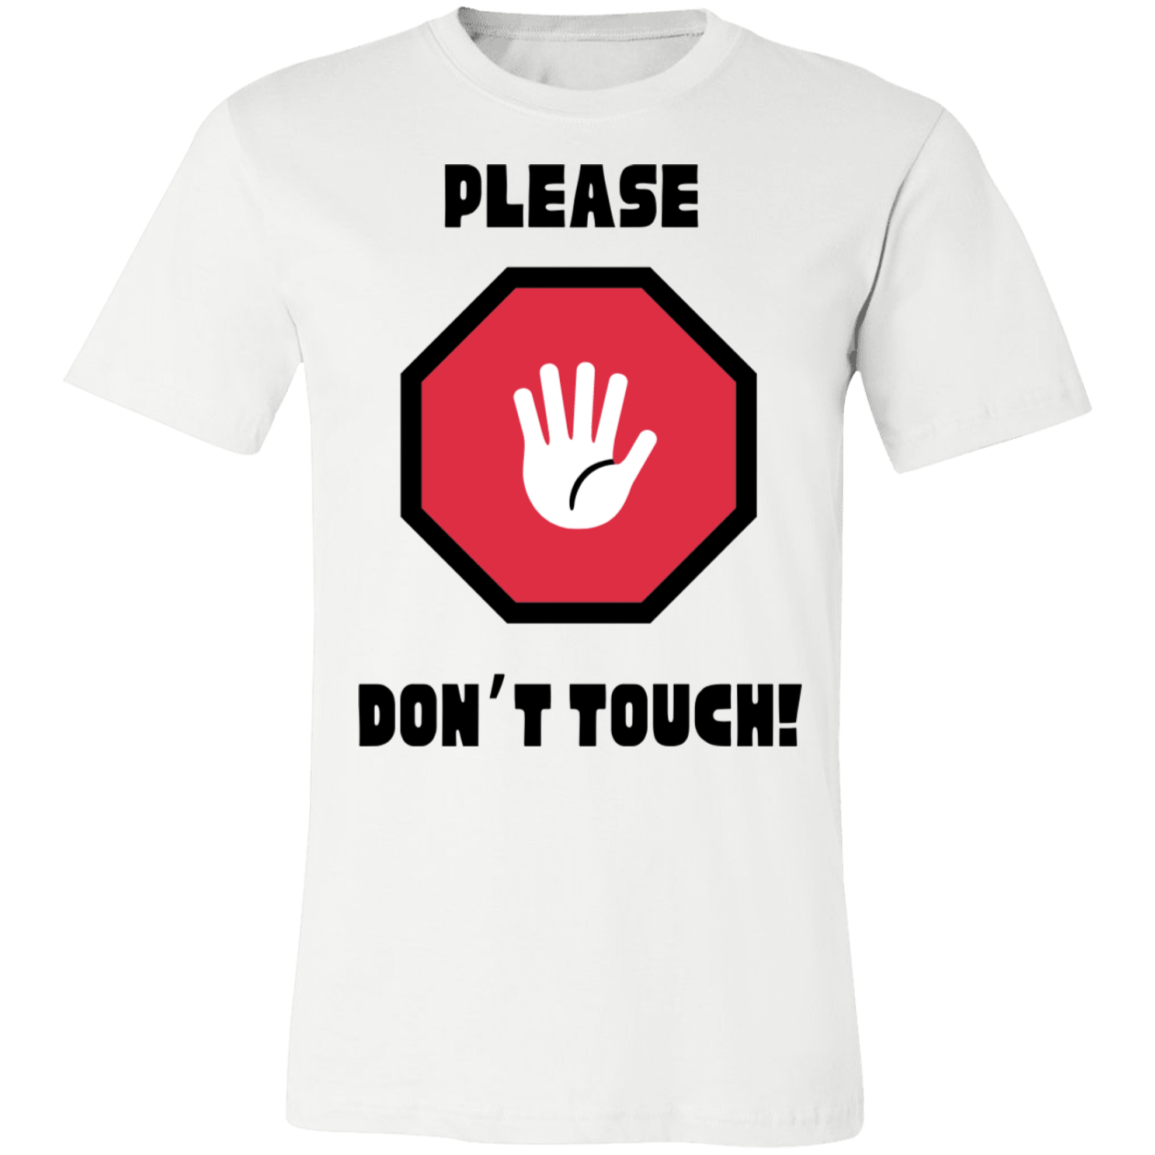 Please Don’t Touch Unisex Short-Sleeve T-Shirt